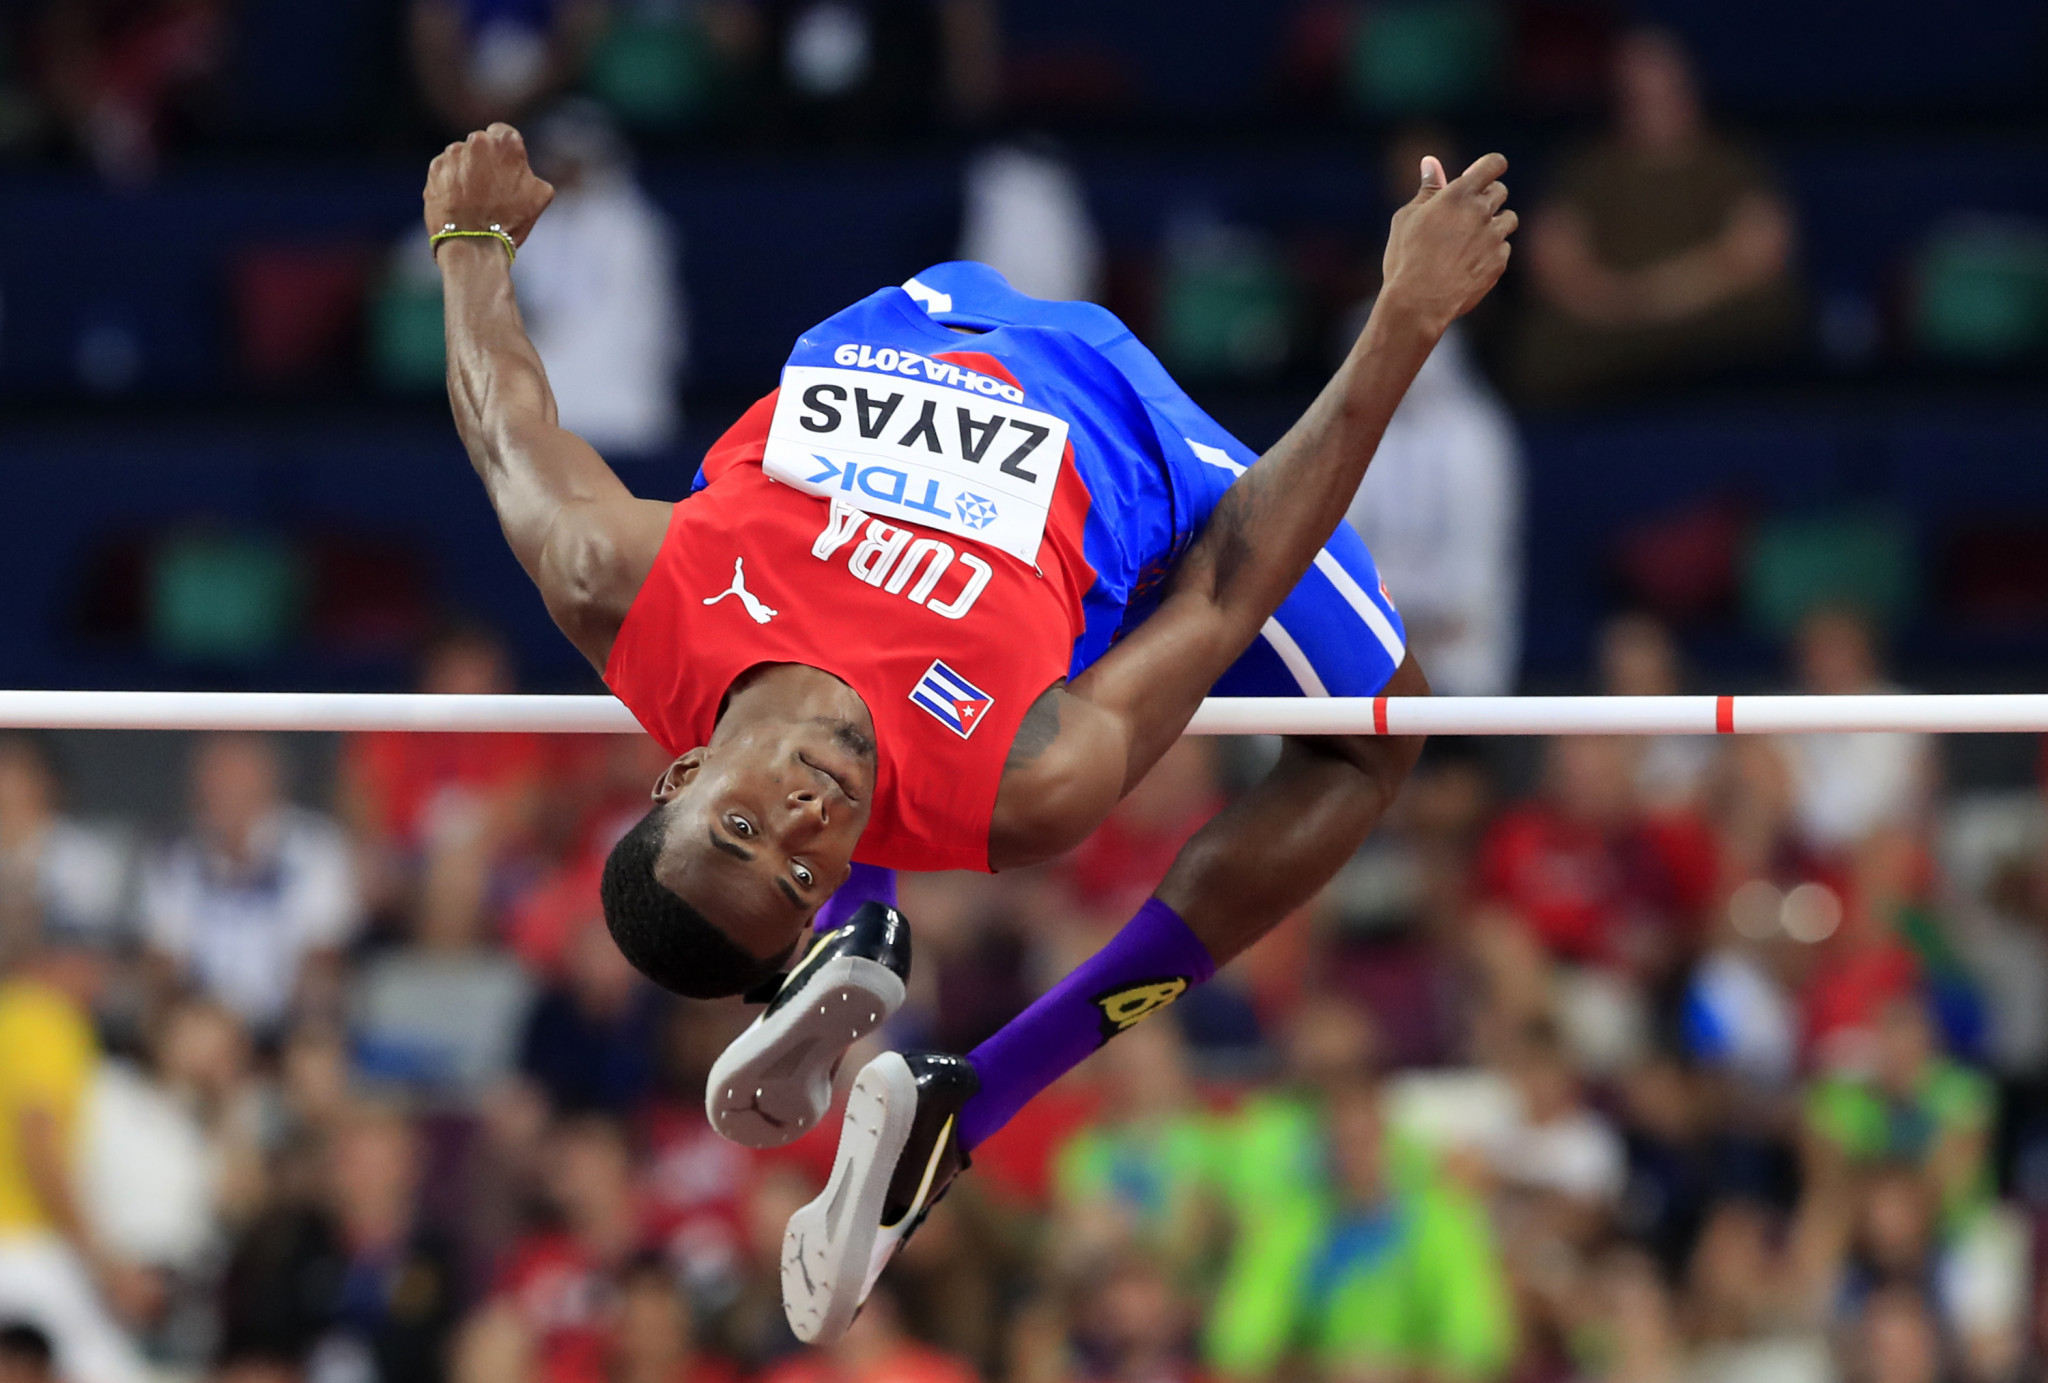 Zayas returns to Banská Bystrica to defend Banskobystrická latka men’s high jump title